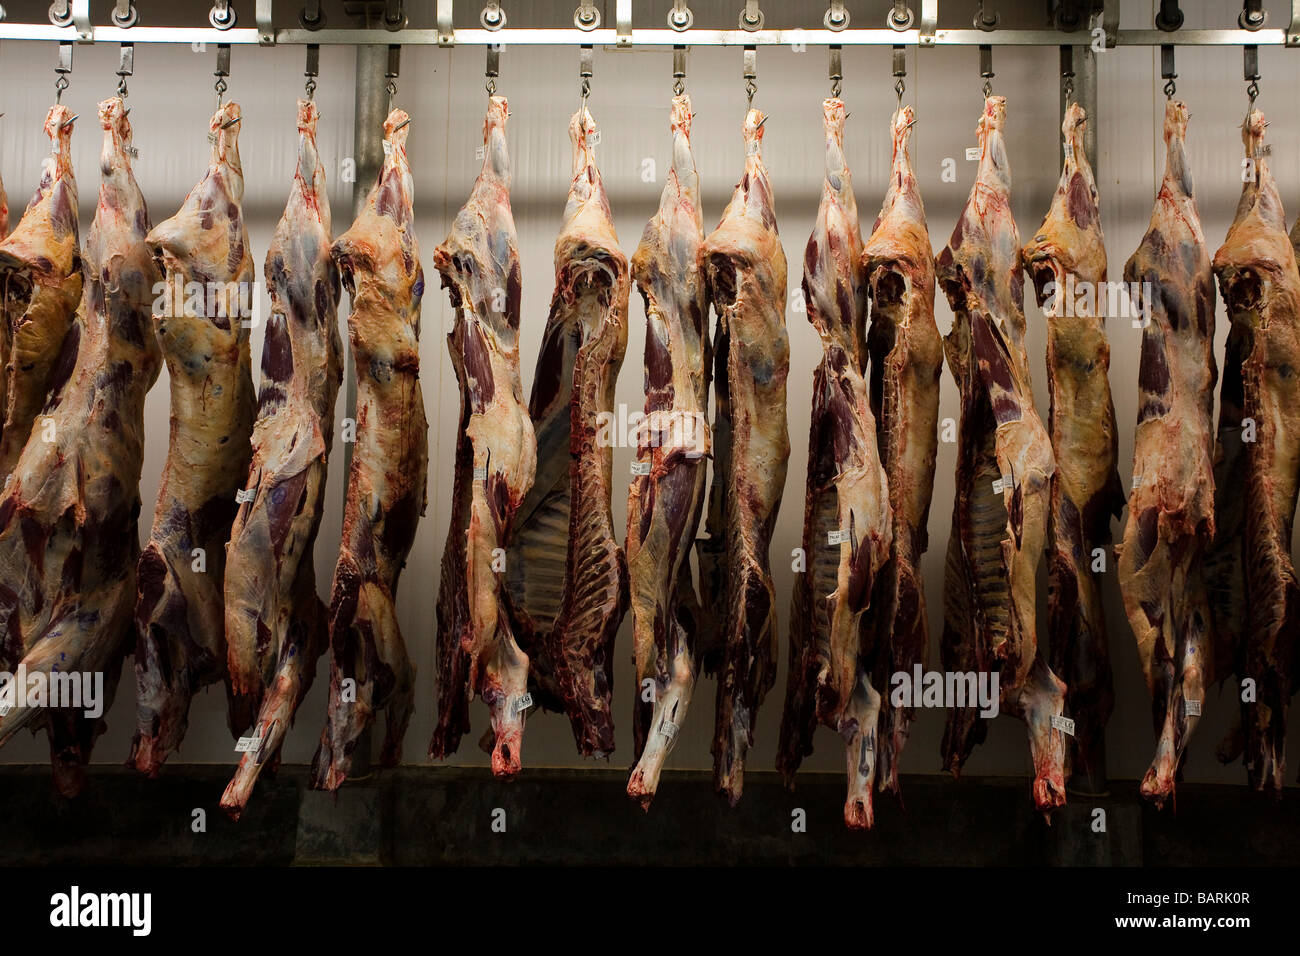 Slaughterhouse Facility meat export Mato Grosso State Amazon Brazil Stock Photo